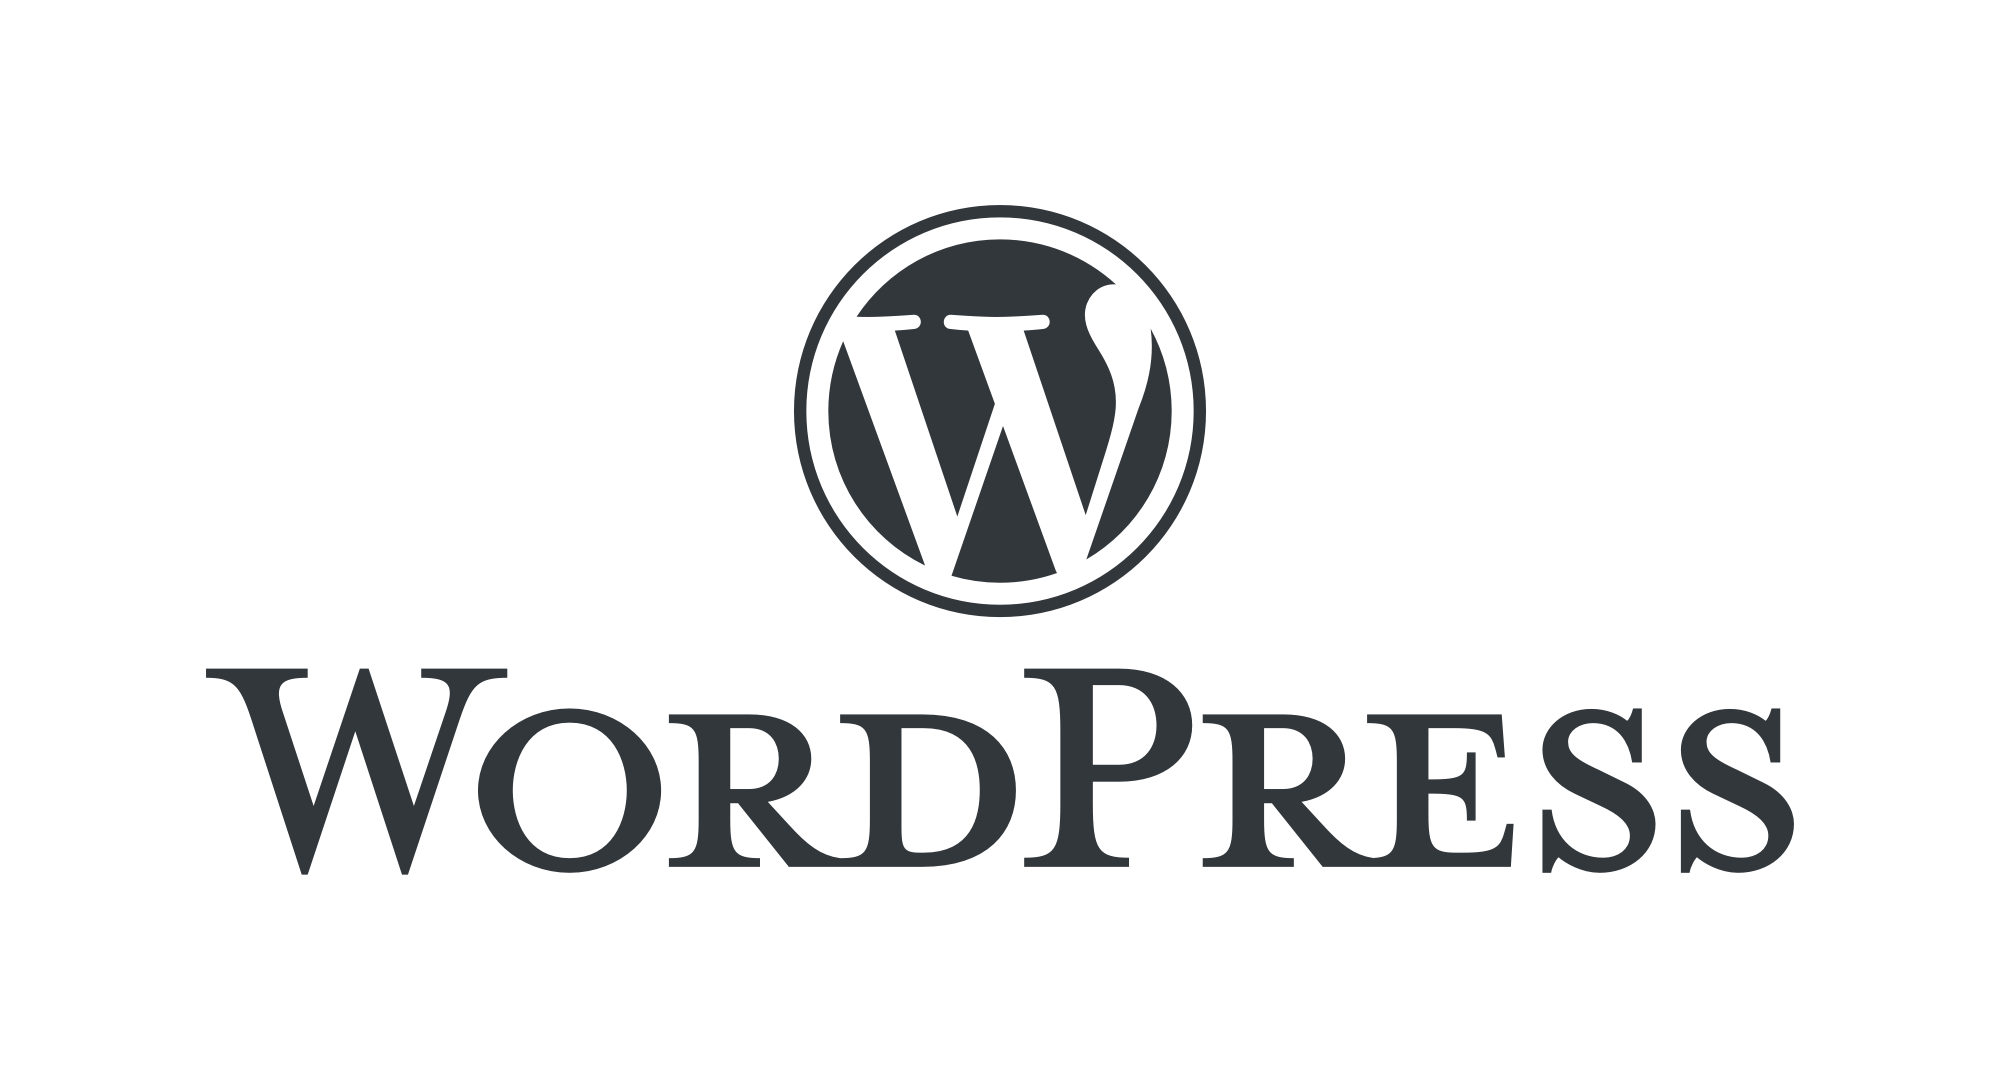 We work on WordPress